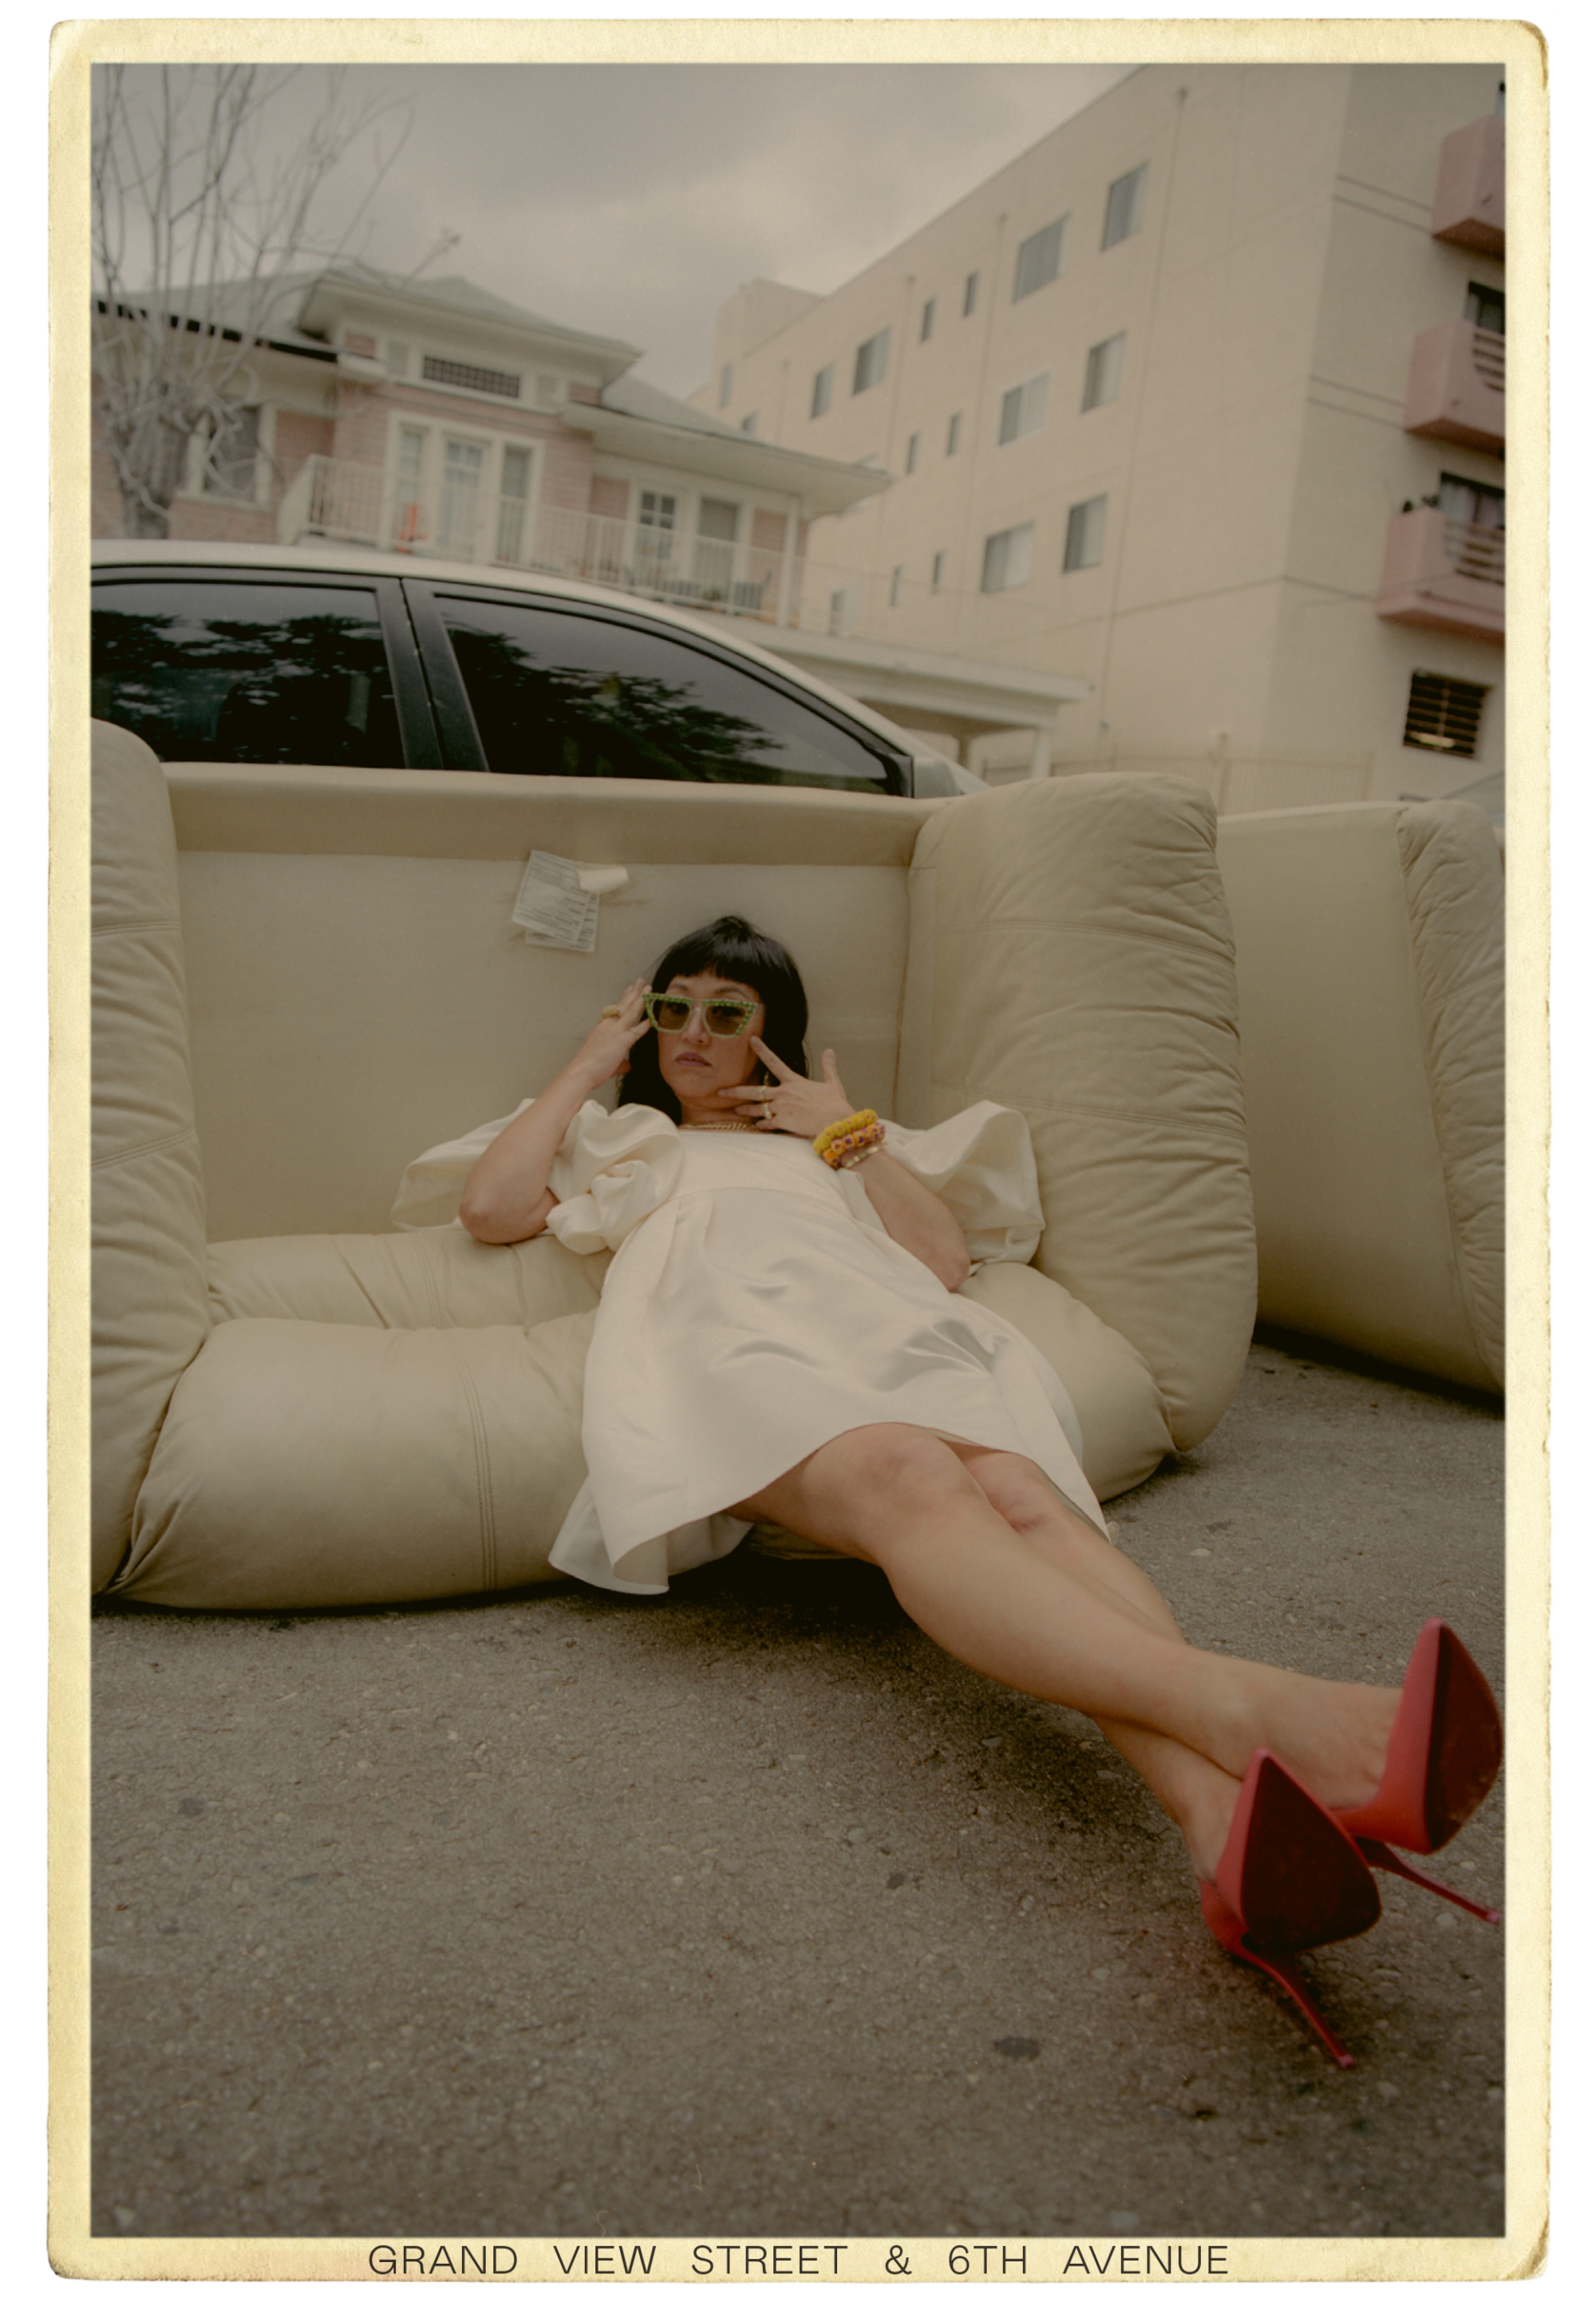 Christine Y. Kim lays on a couch left on the sidewalk